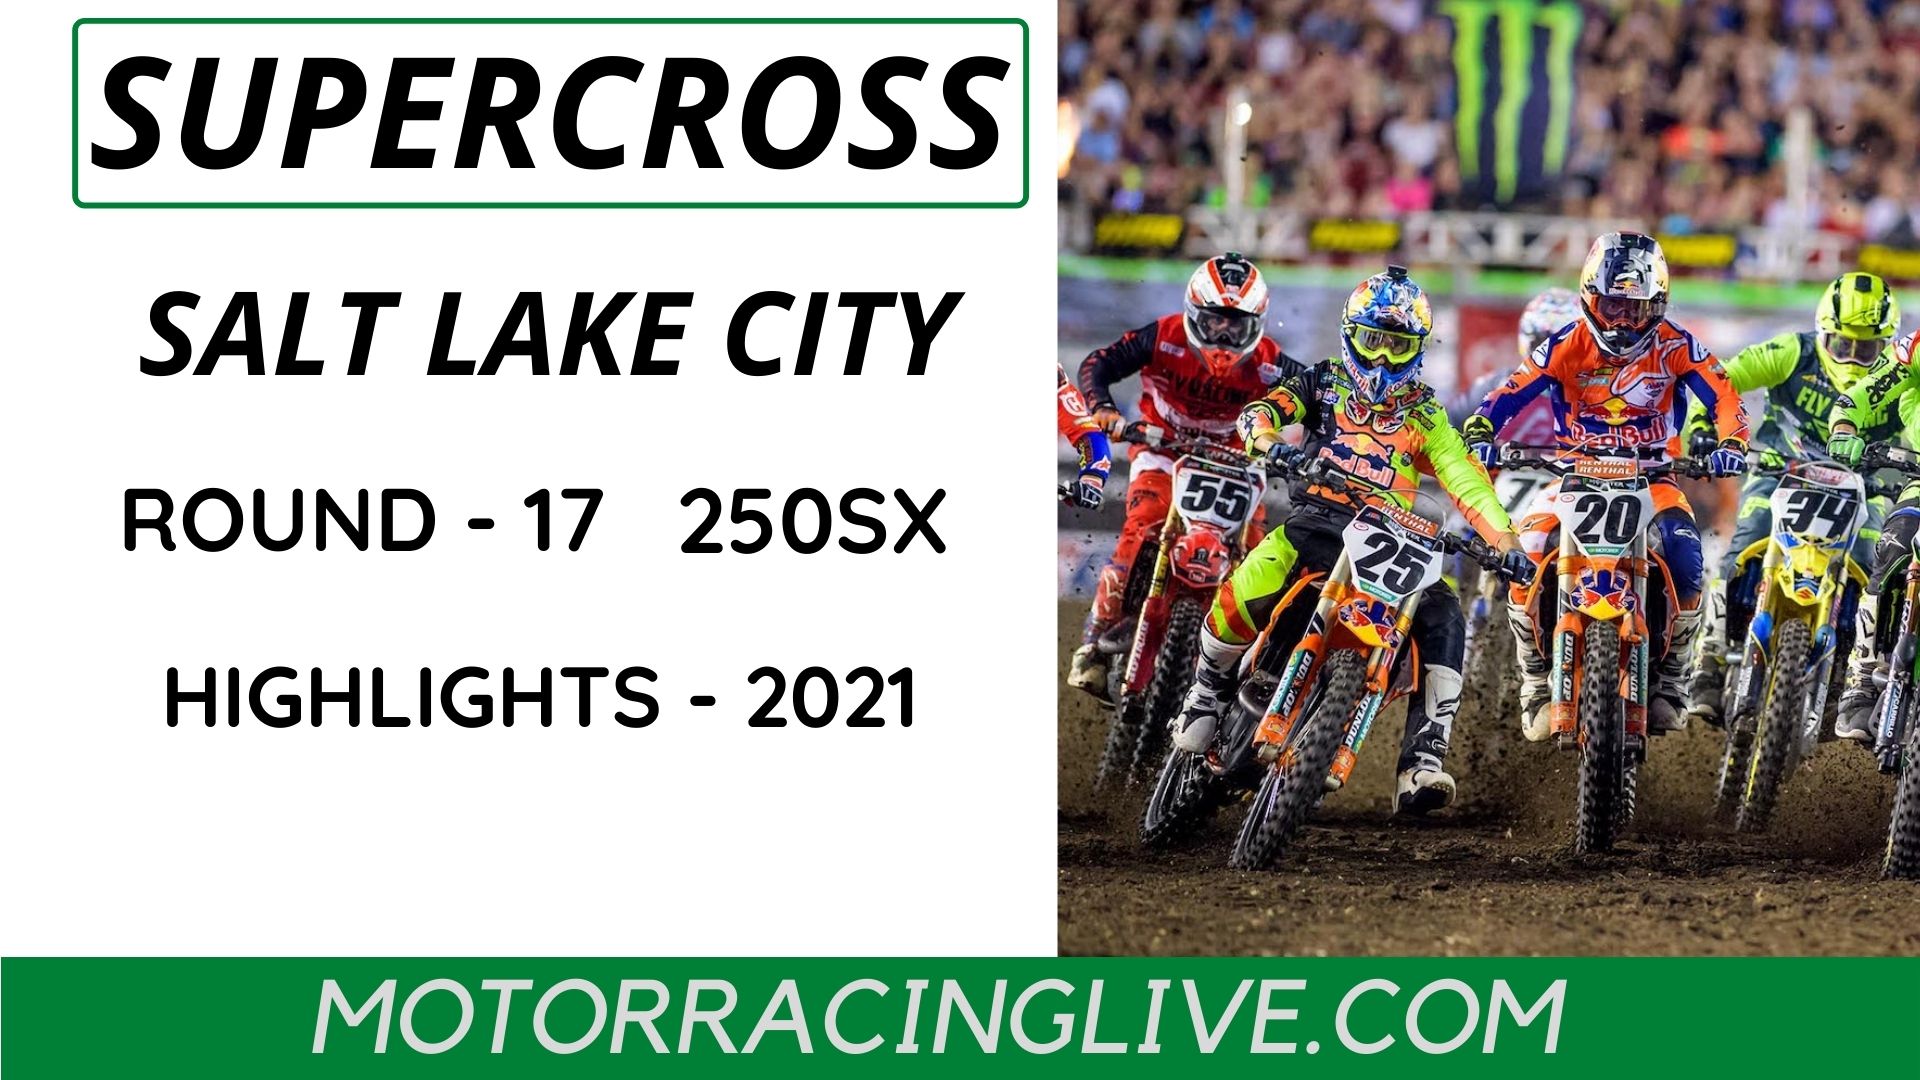 Salt Lake City Round 17 250SX Highlights 2021 Supercross